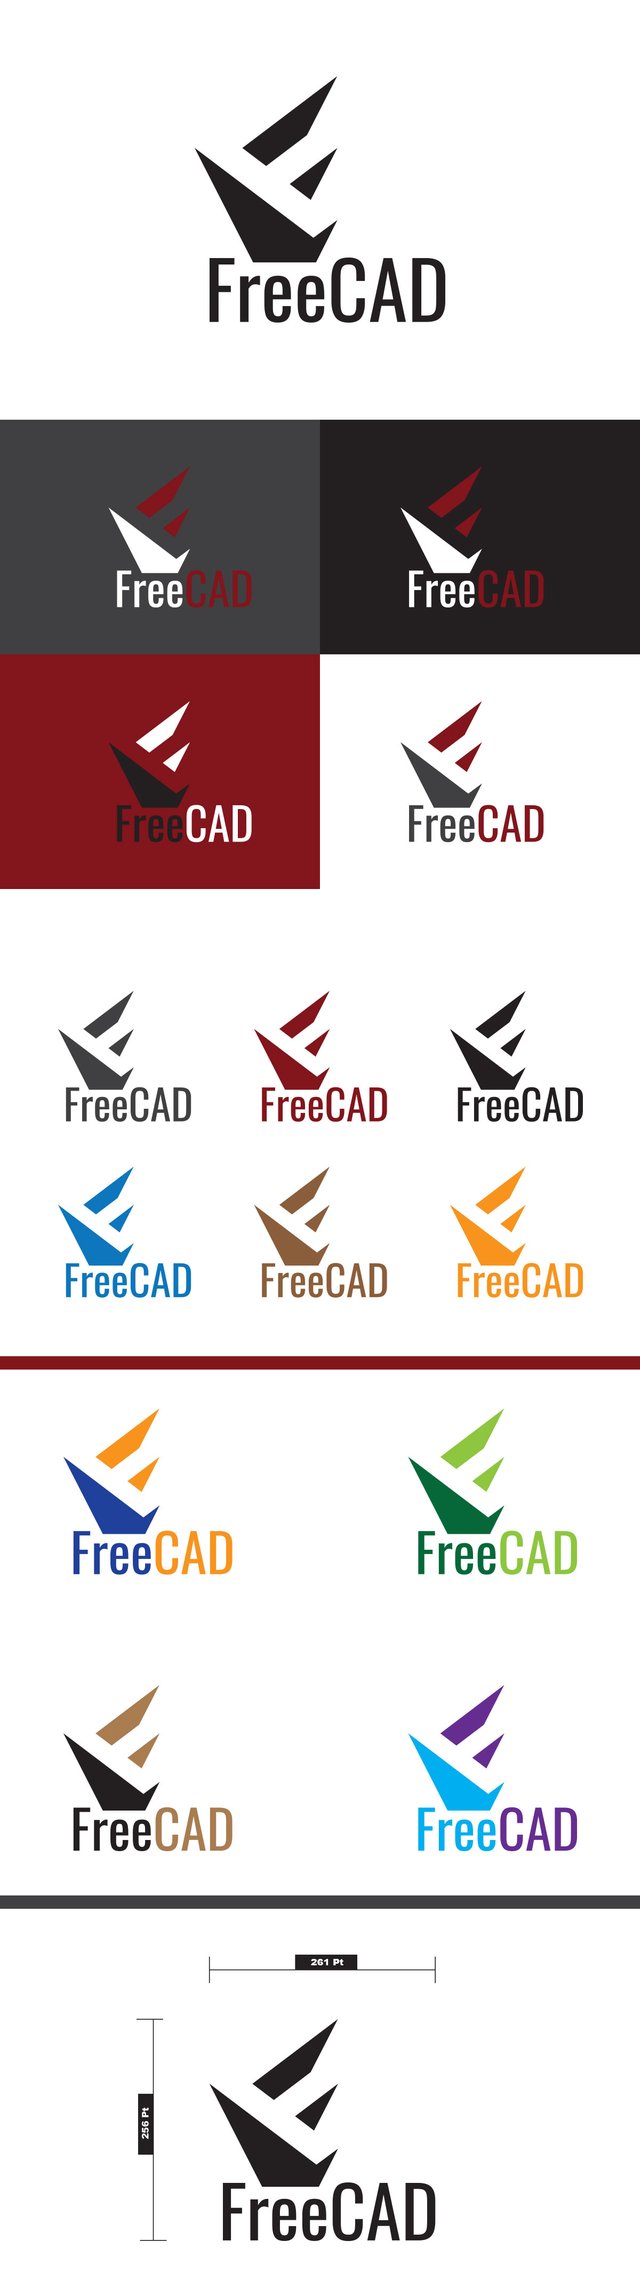 FreeCAD-2.jpg